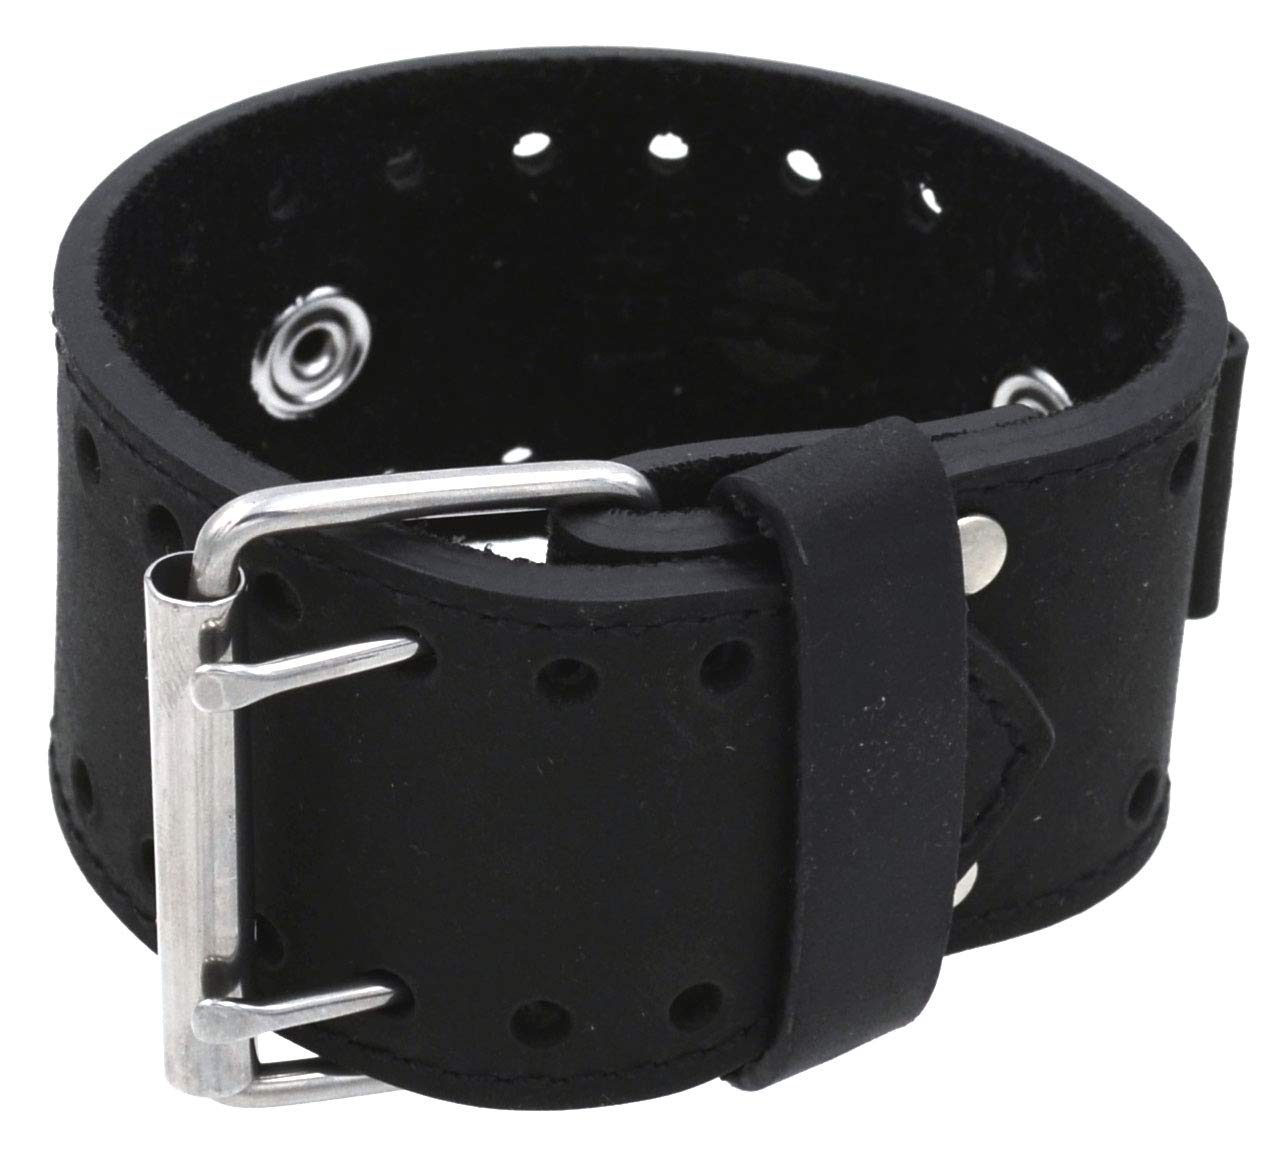 REV Crazy Horse Leather Strap Lug Width Wide Black Cuff Watch Band CHO-K 20mm -22mm